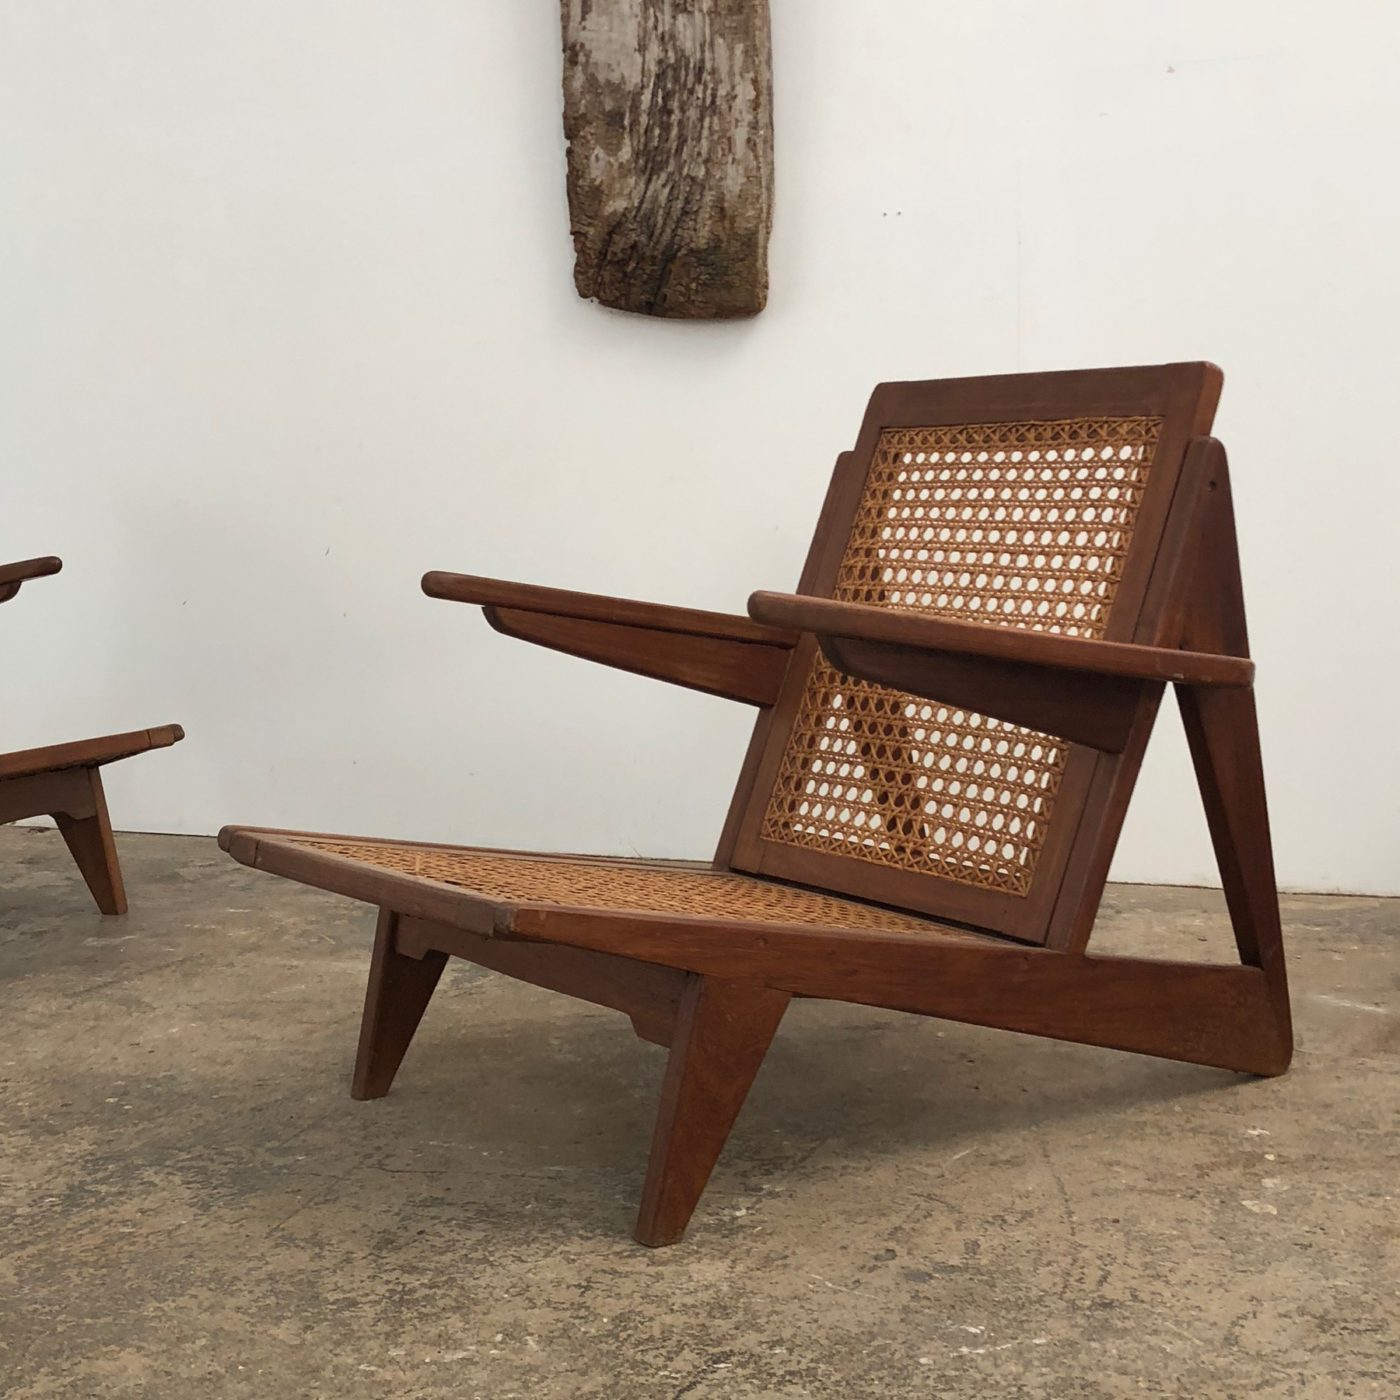 brazilian-cane-chairs0009